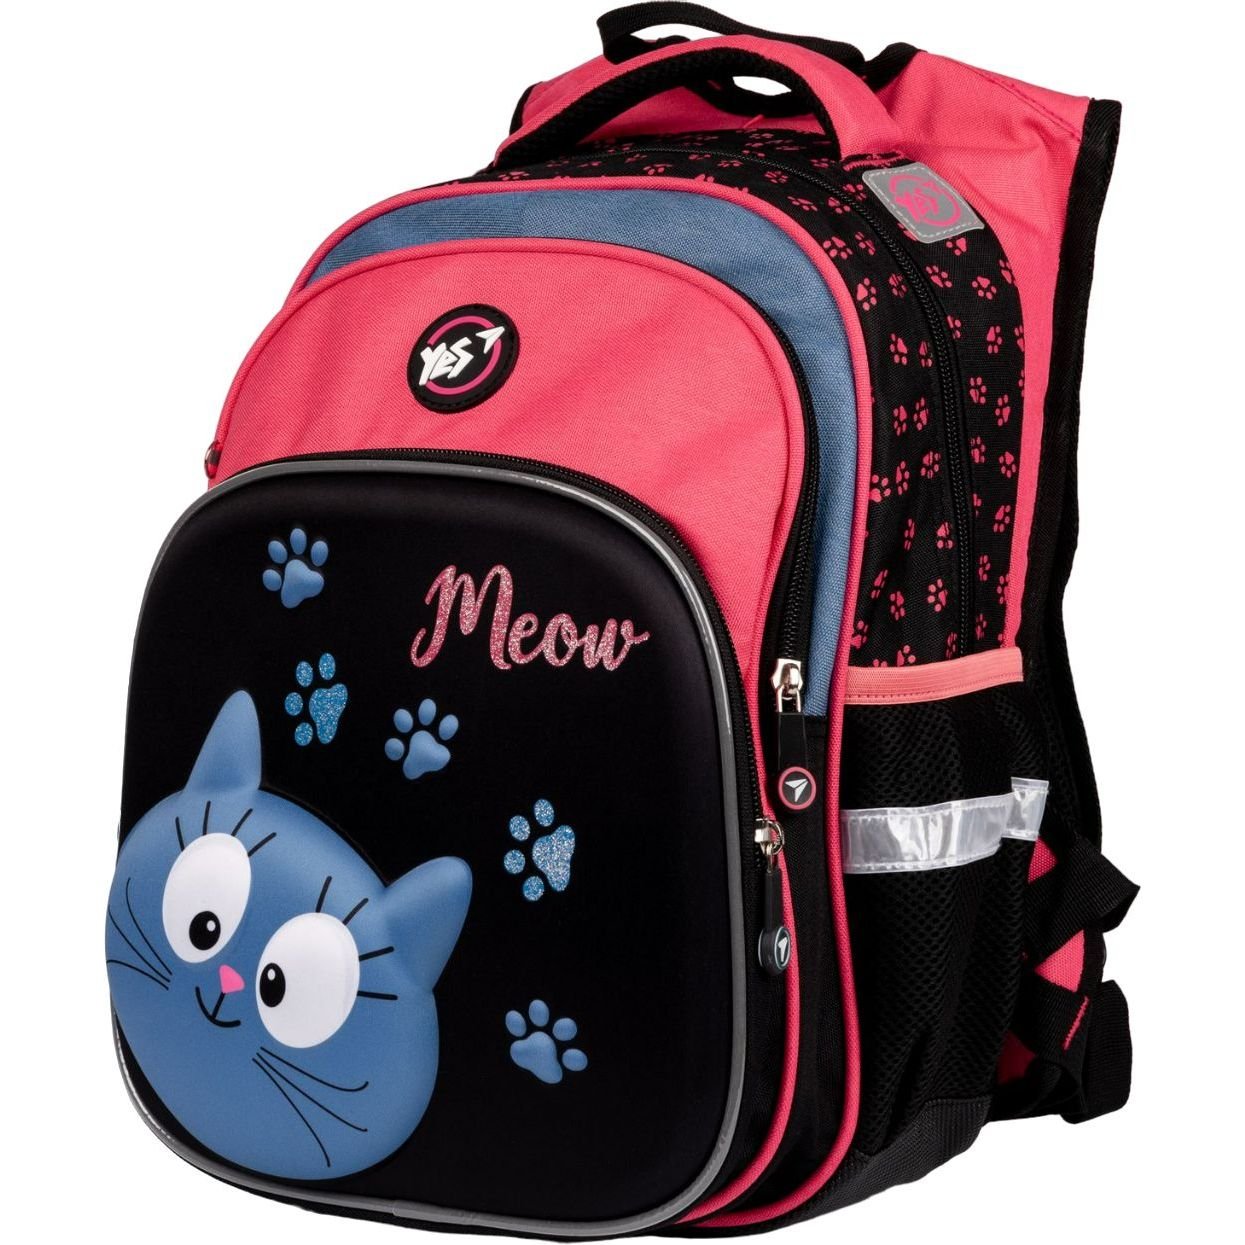 Рюкзак Yes S-58 Meow, черный с розовым. (558004) - фото 1